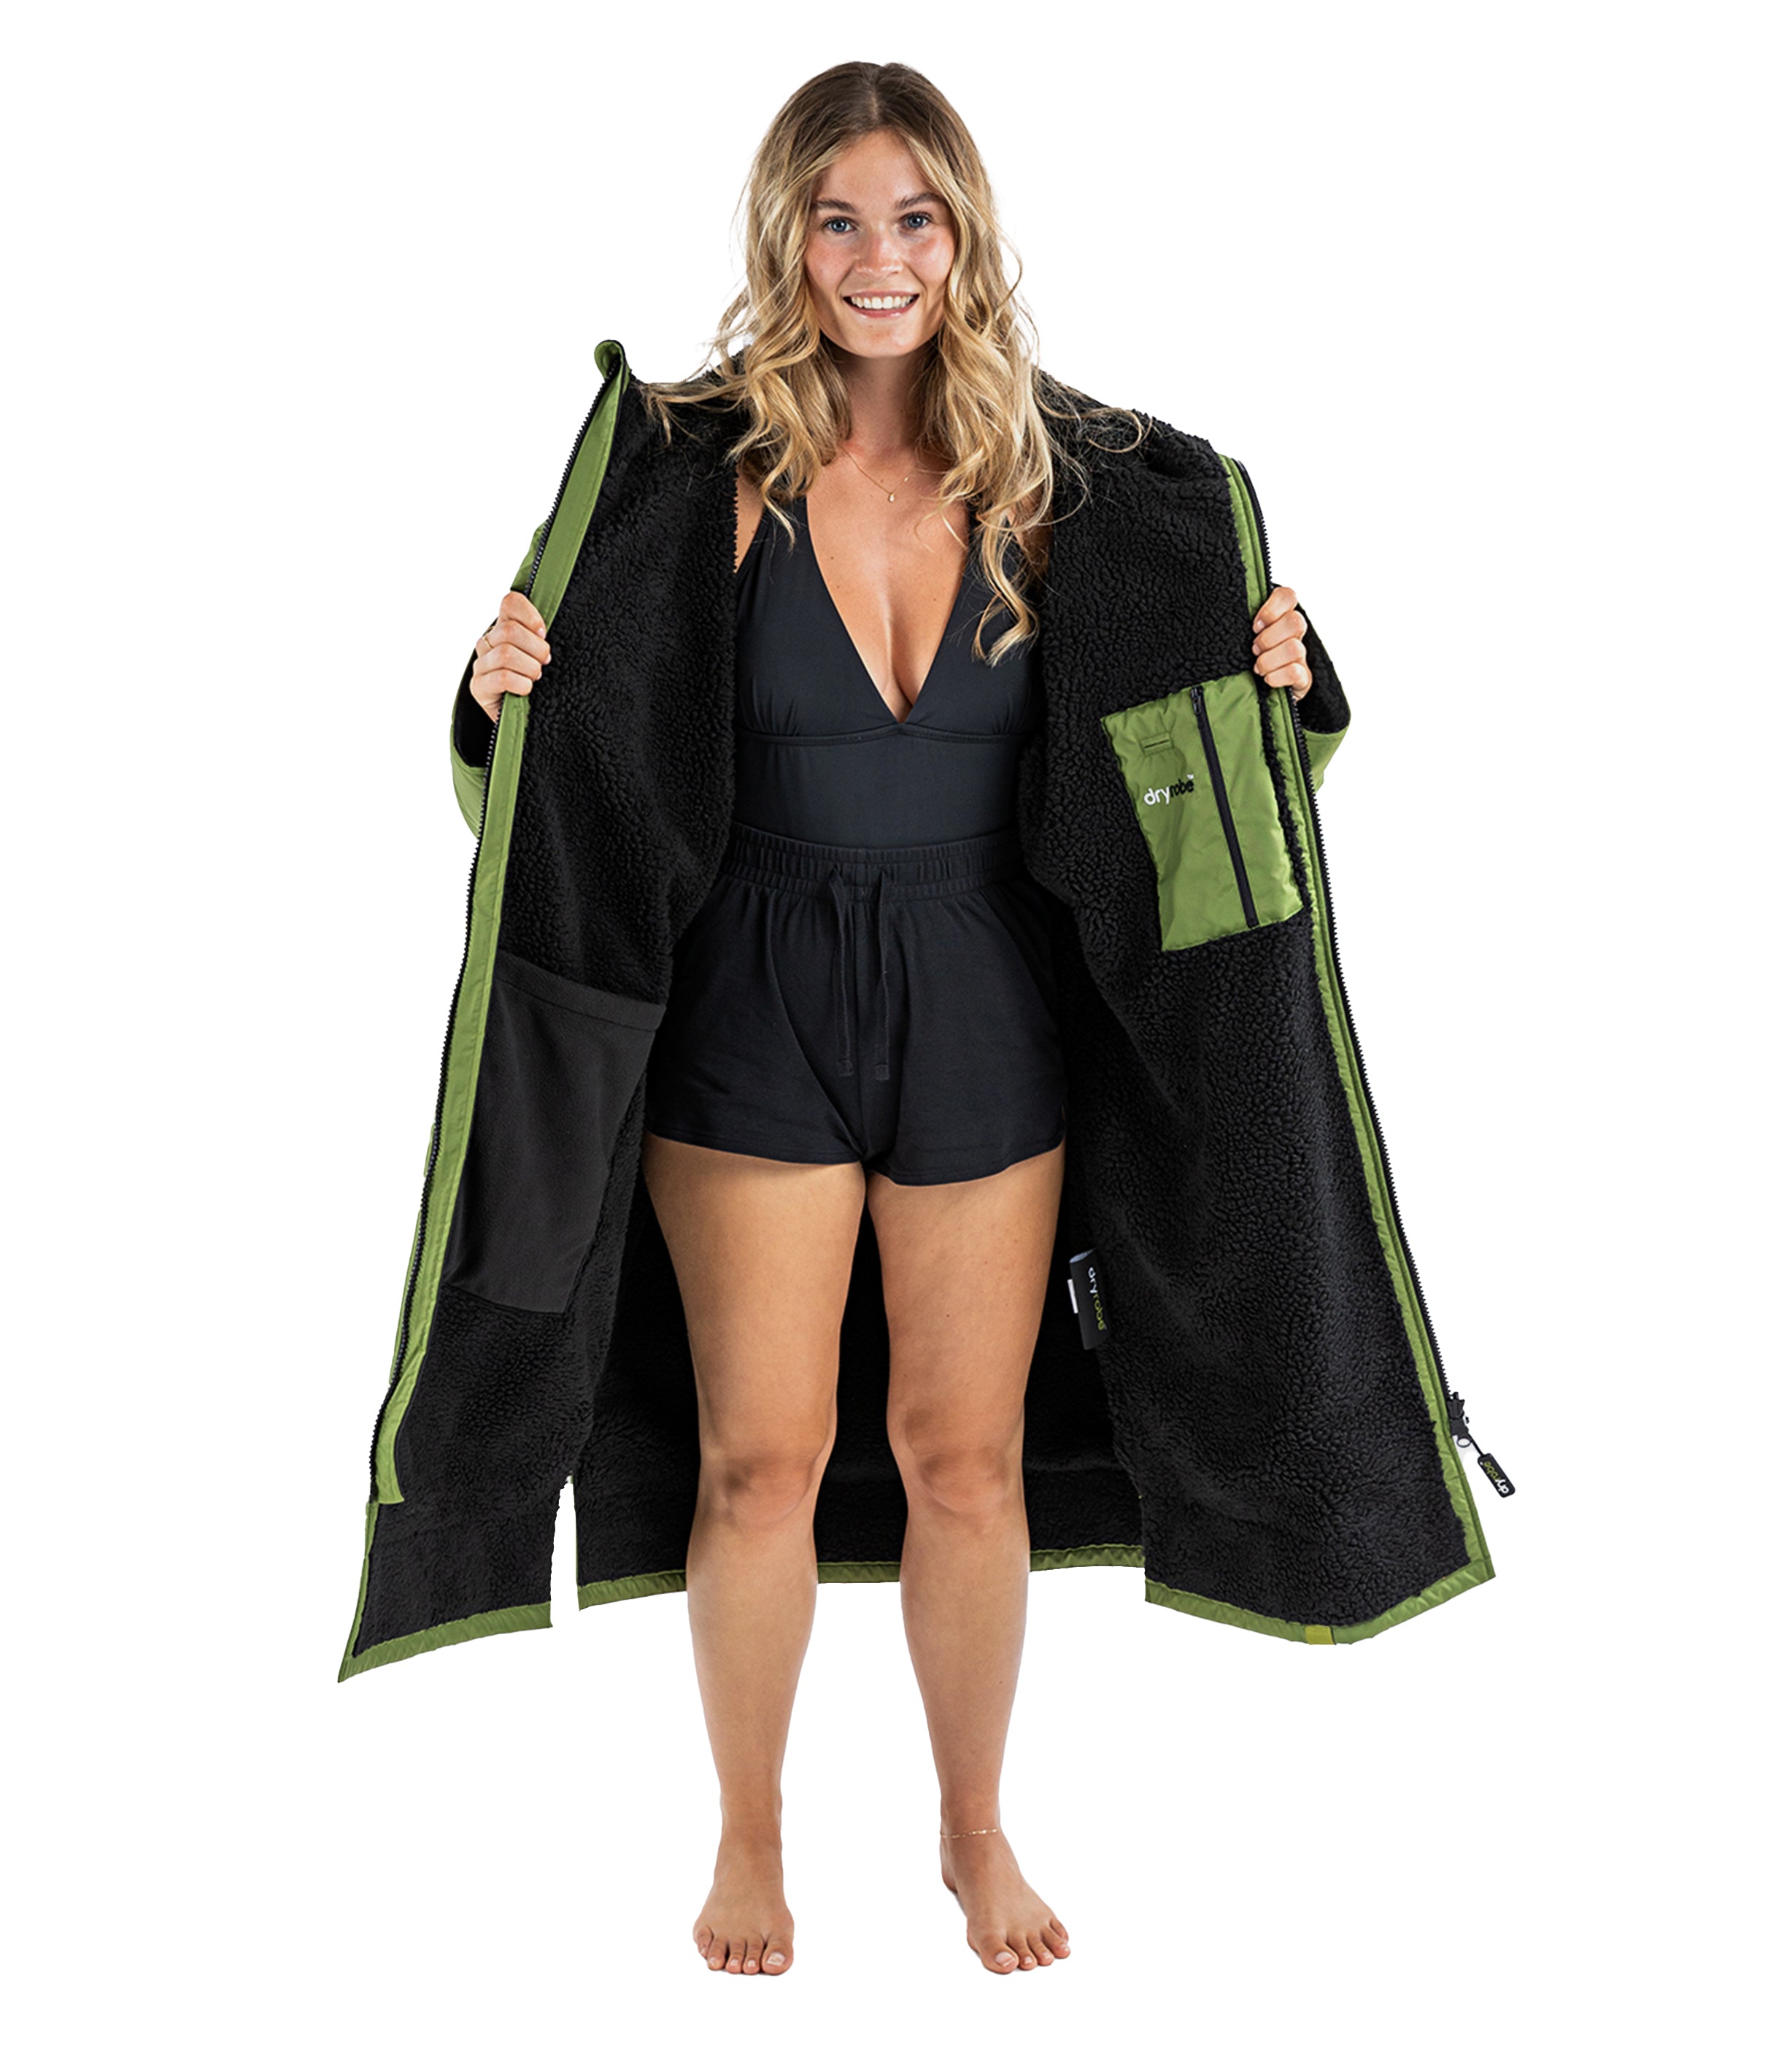 dryrobe Advance Long Sleeve | Forest Green/Black modelled showing black fleece lining